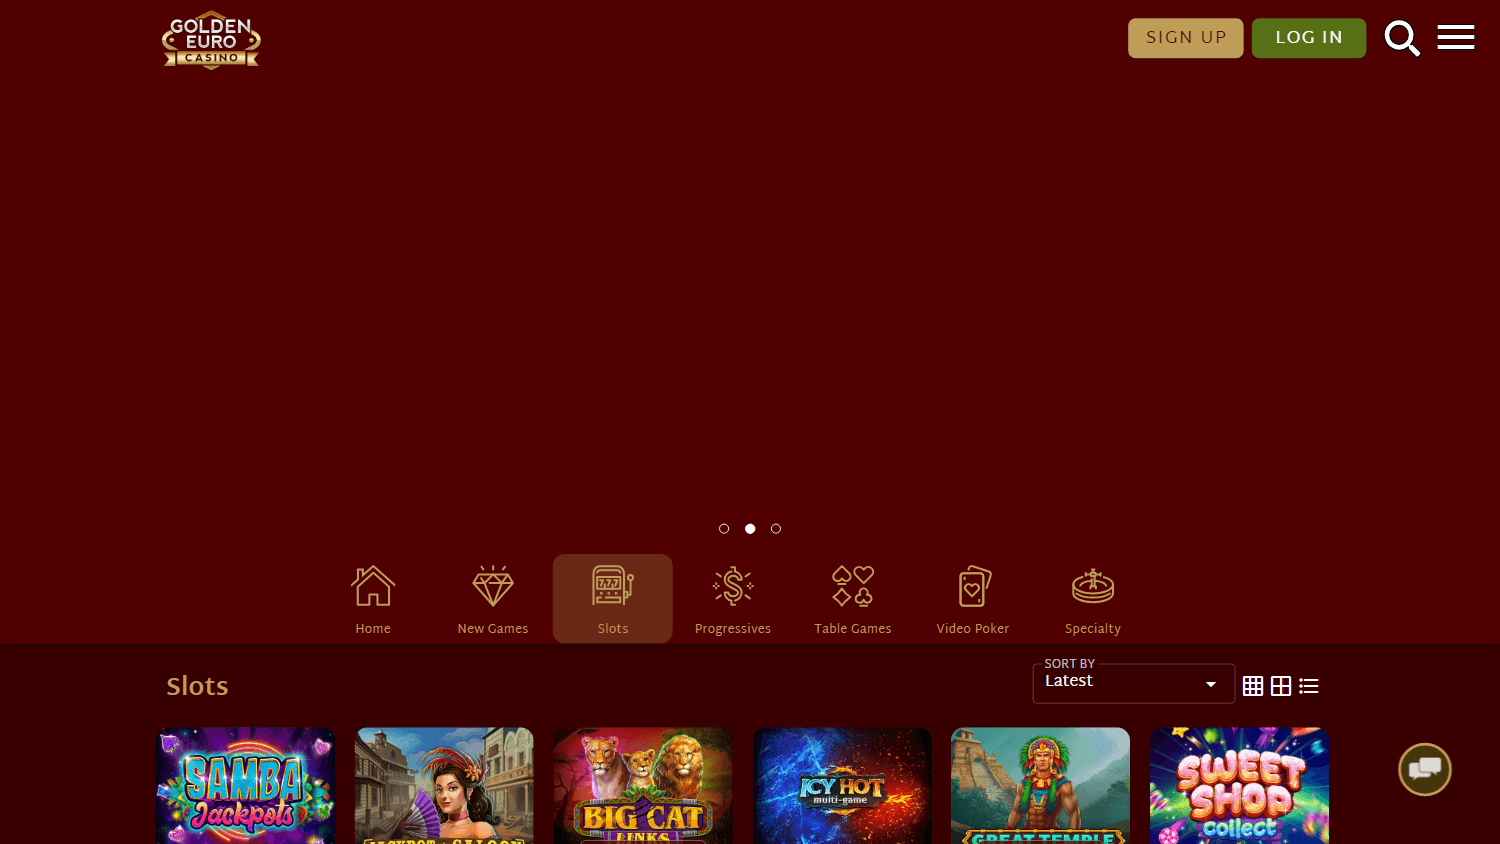 golden_euro_casino_game_gallery_desktop